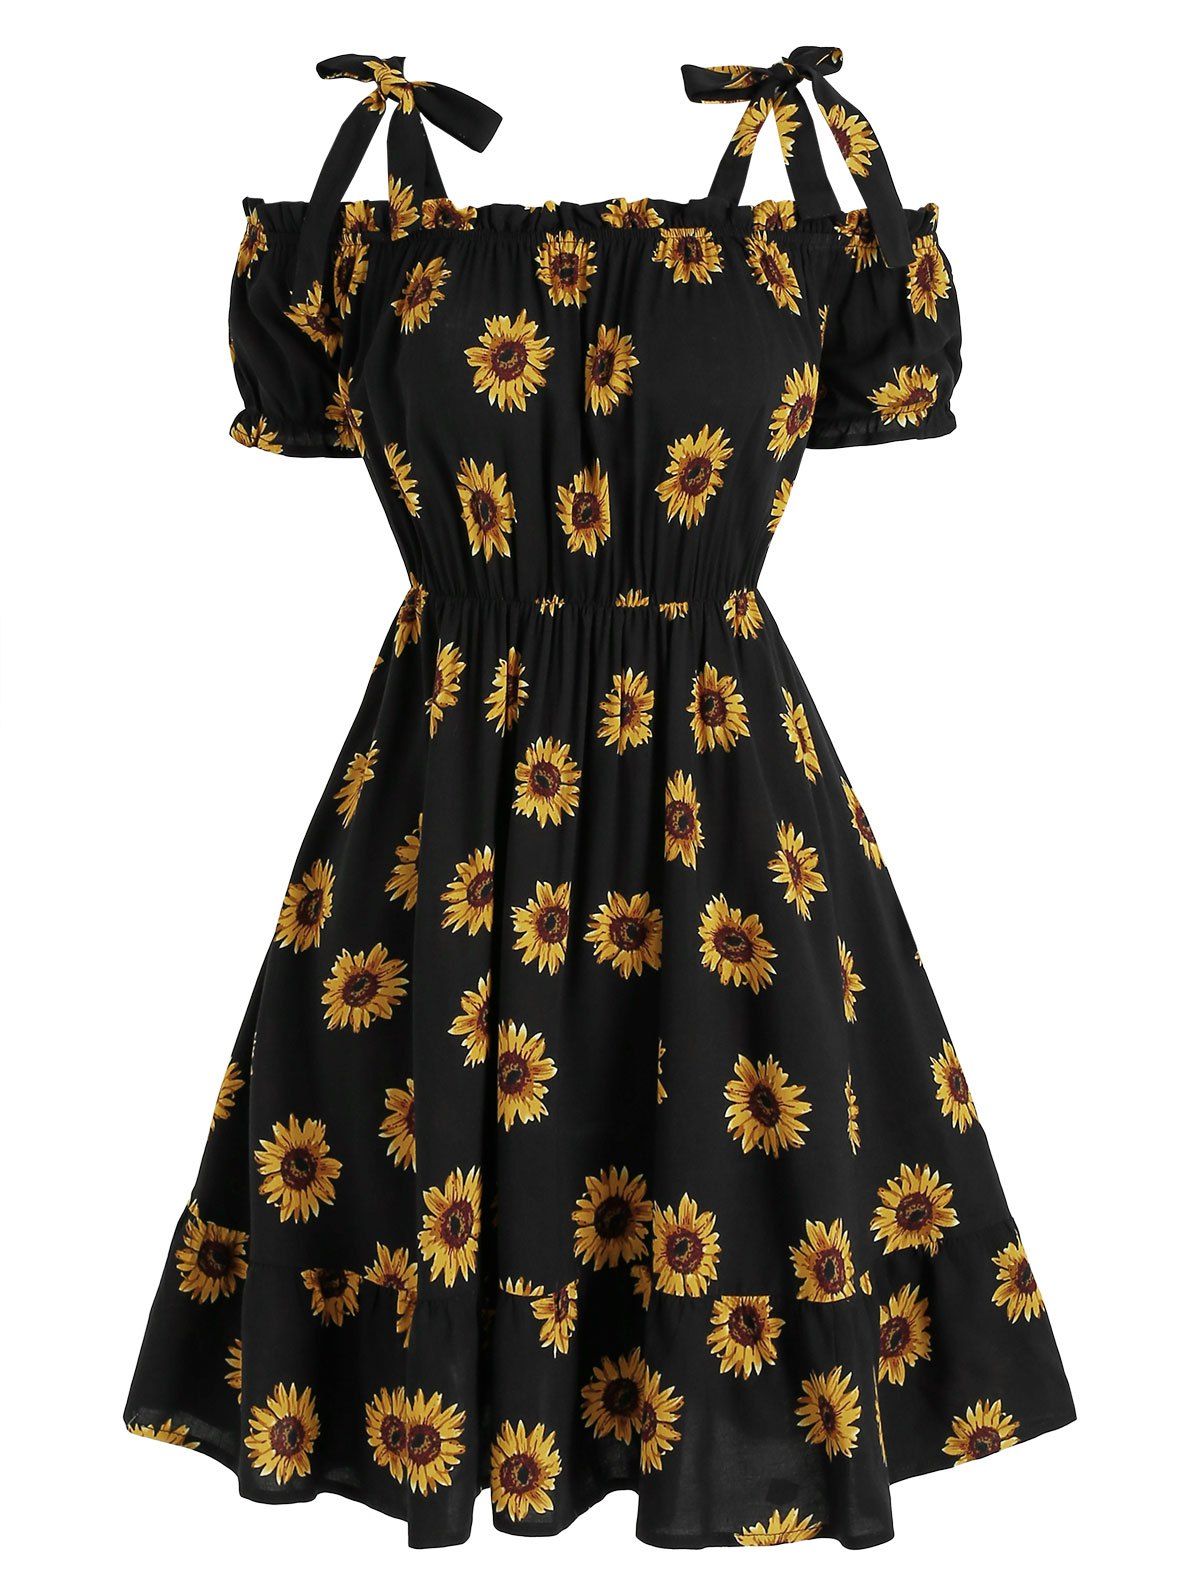 Plus Size Dress Sunflower Dress Tied Shoulder Cold Shoulder A Line Midi Dress - BLACK 1X